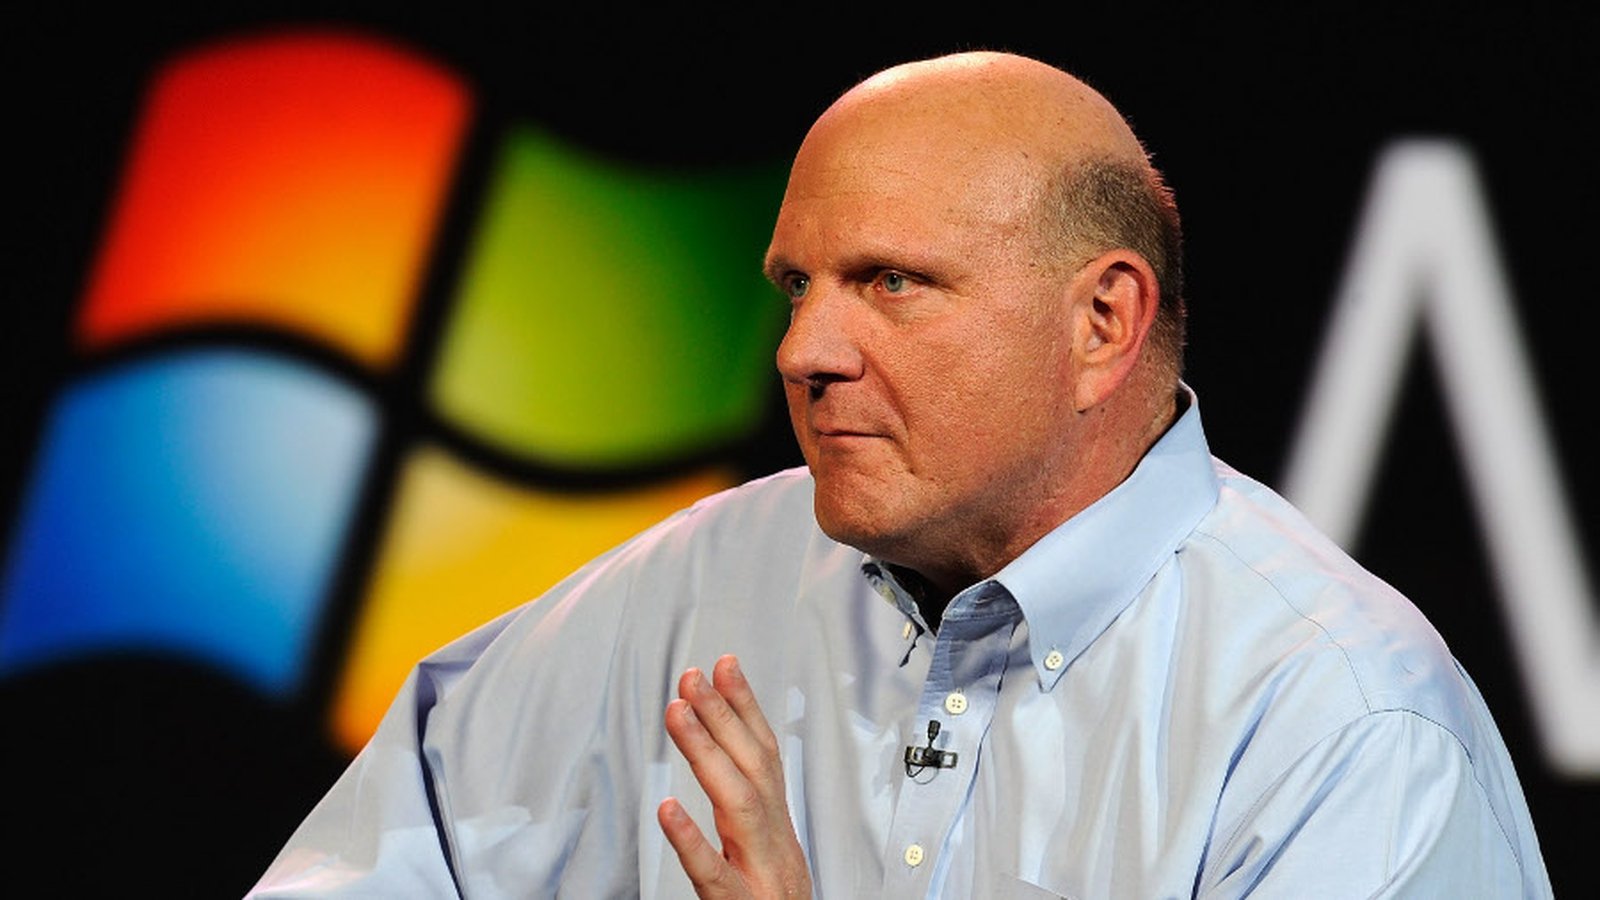 Microsoft CEO Steve Ballmer announces retirement